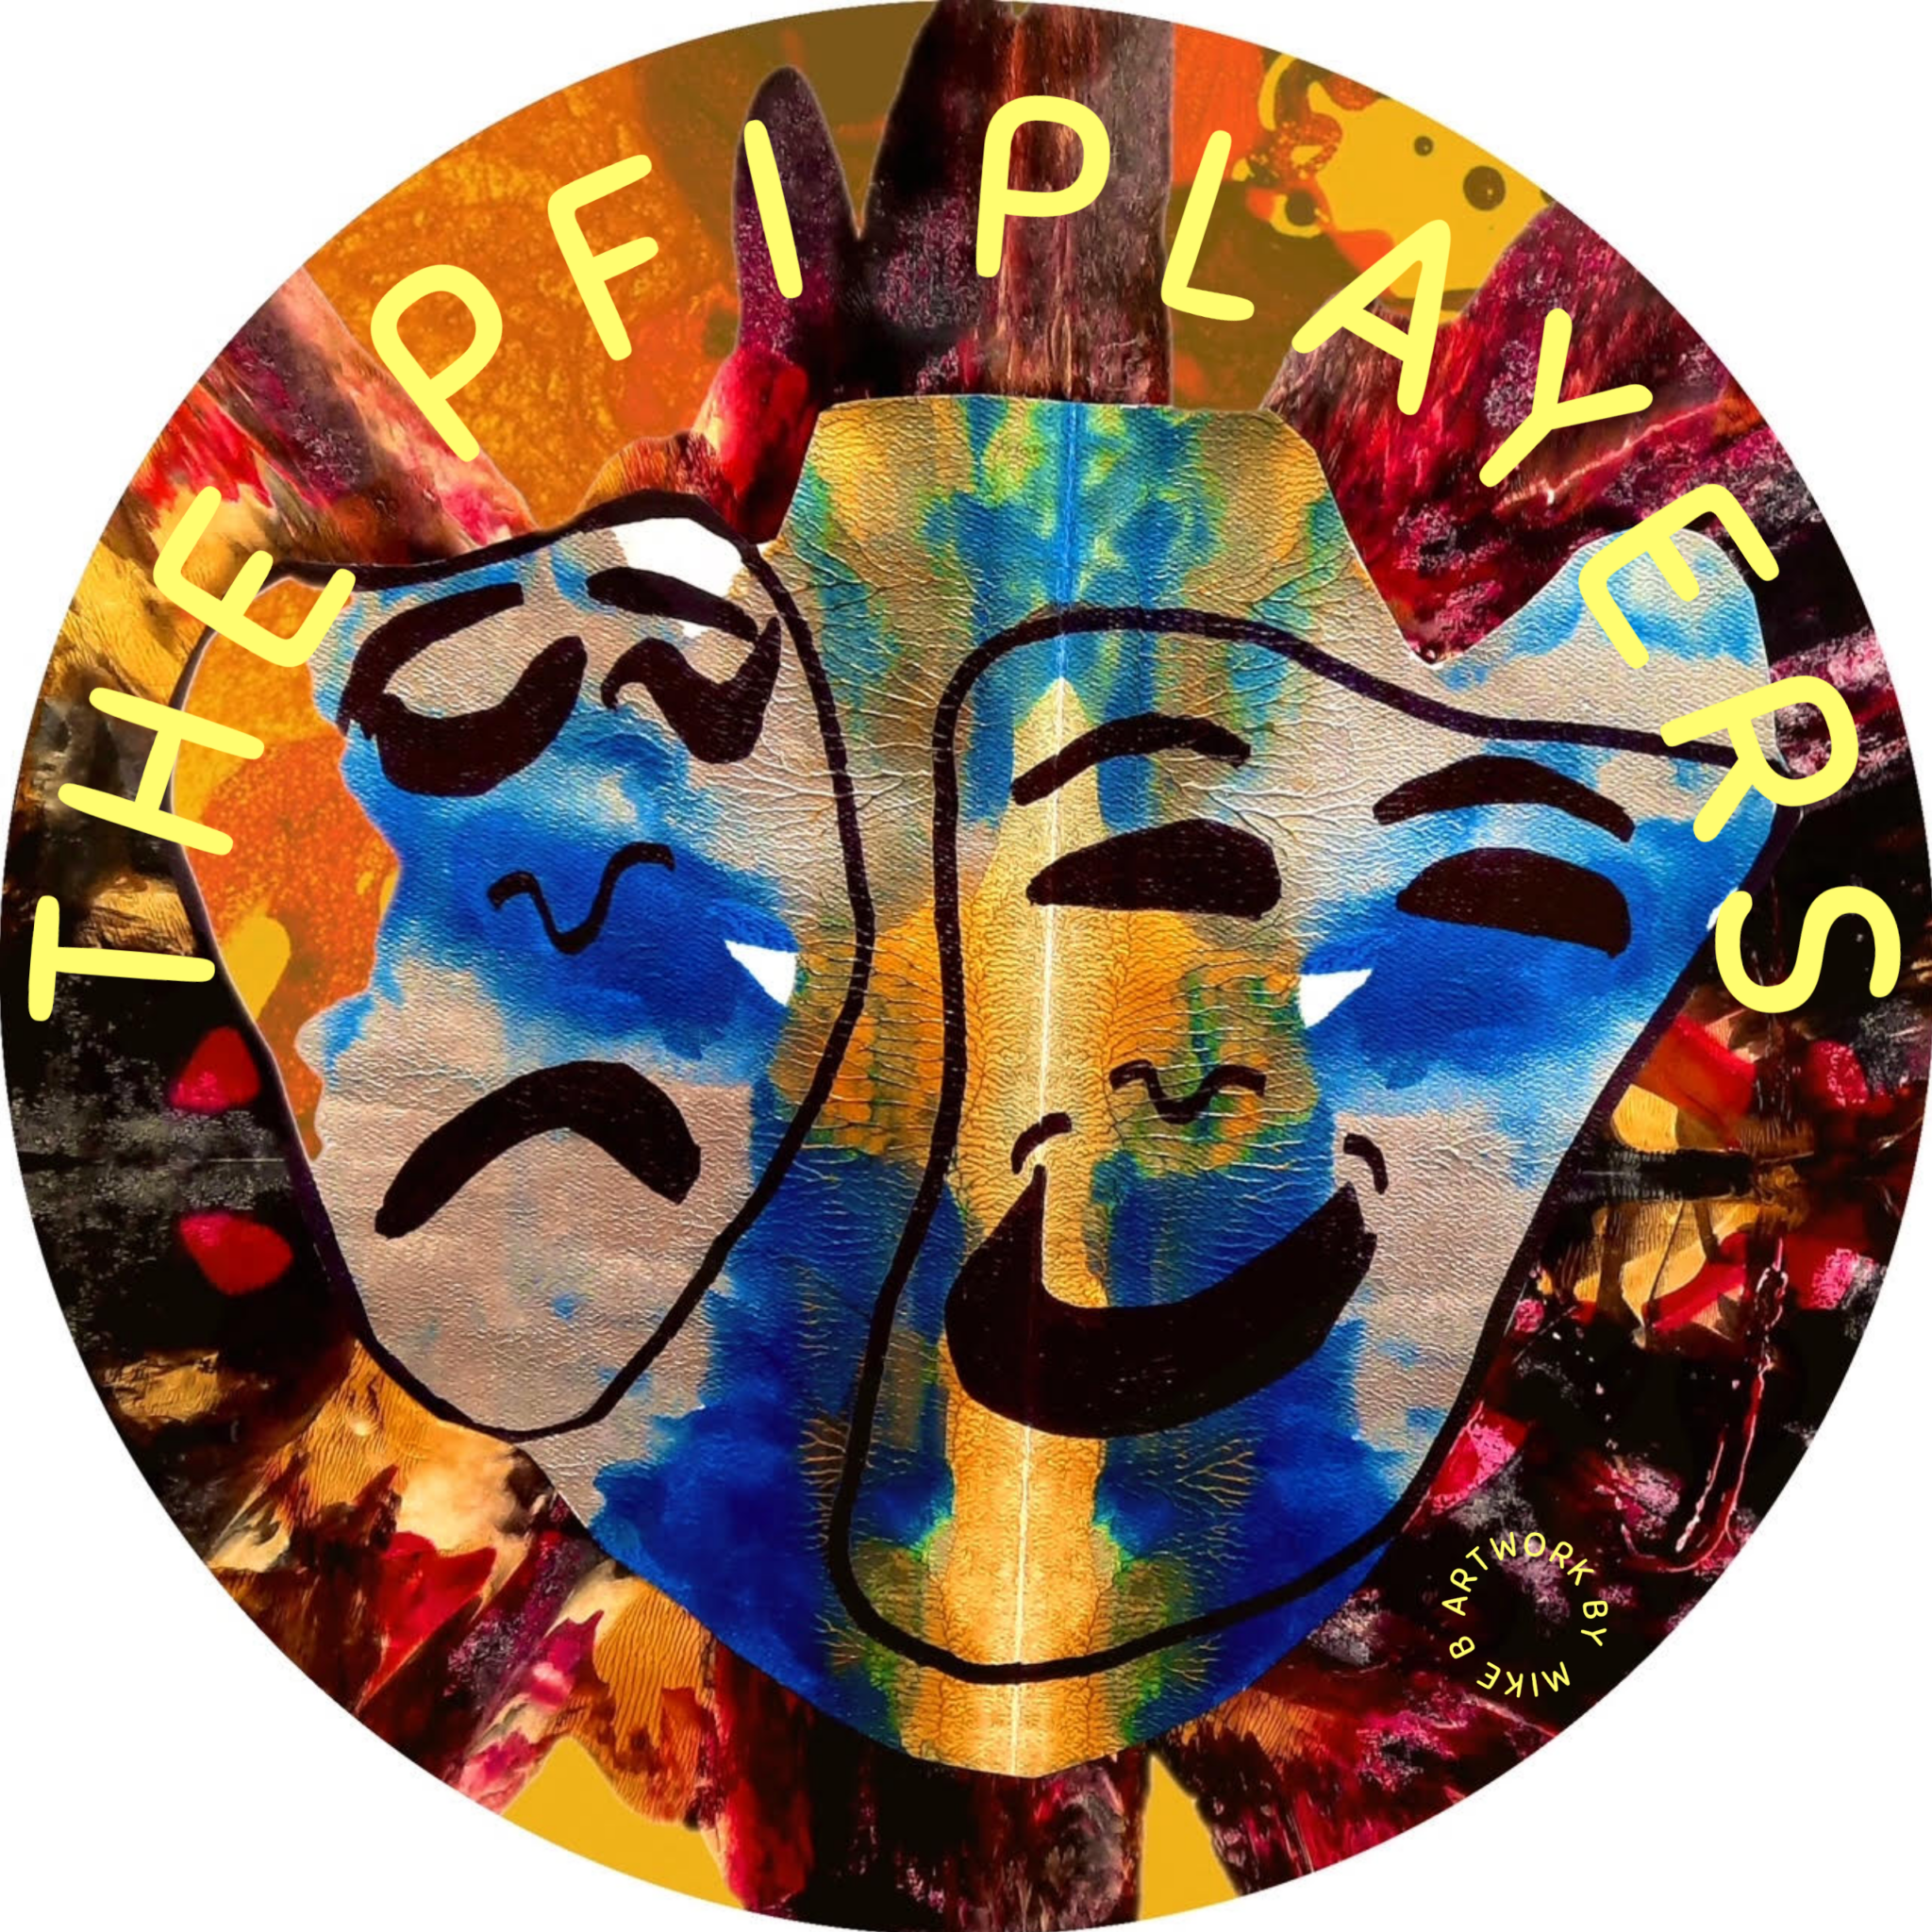 The PFI Players